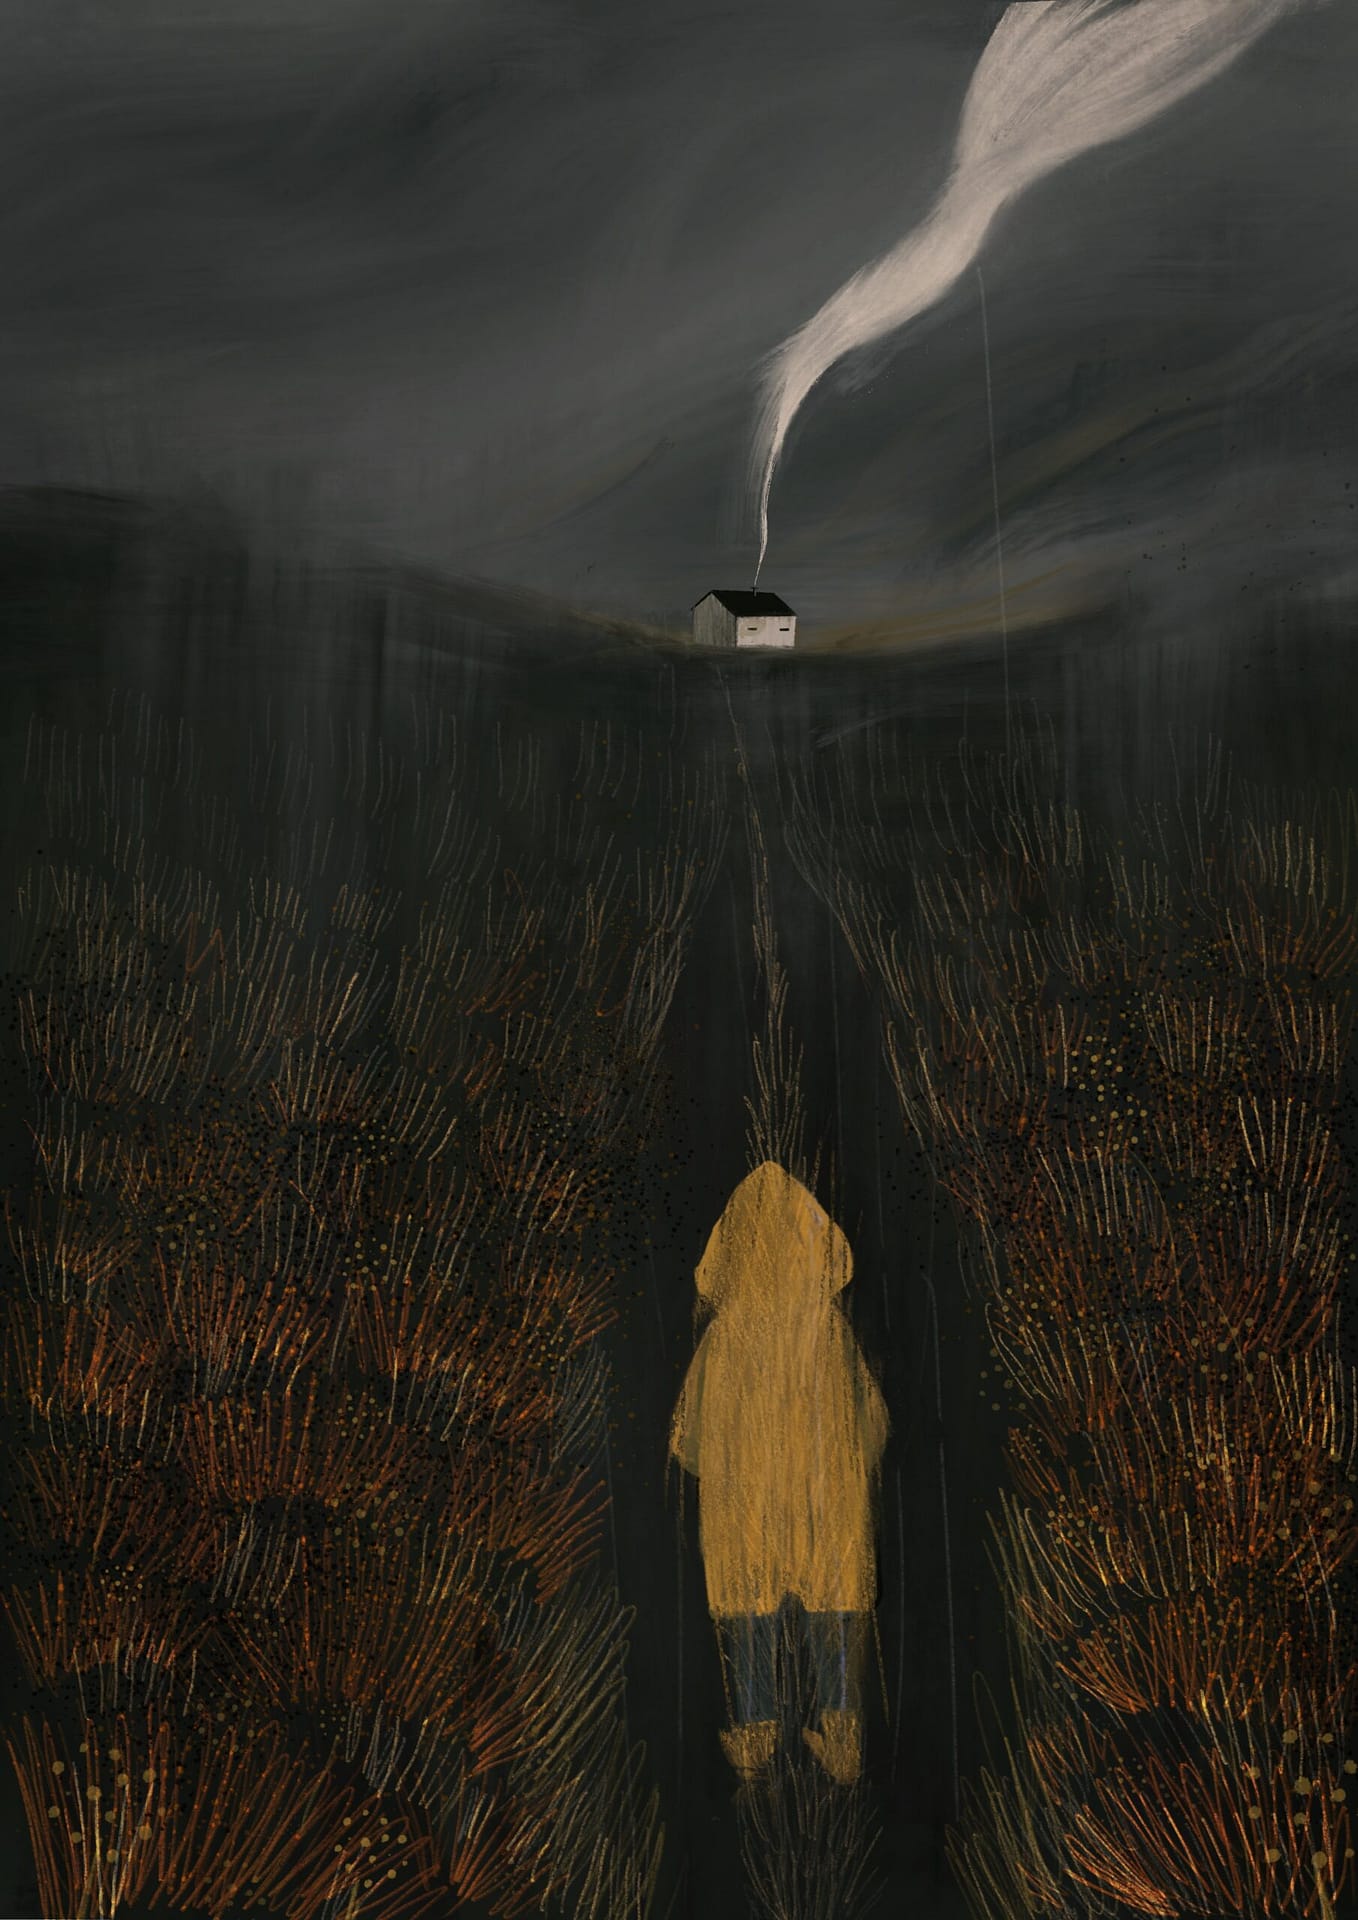 rainy night illustration by Lia Visirin